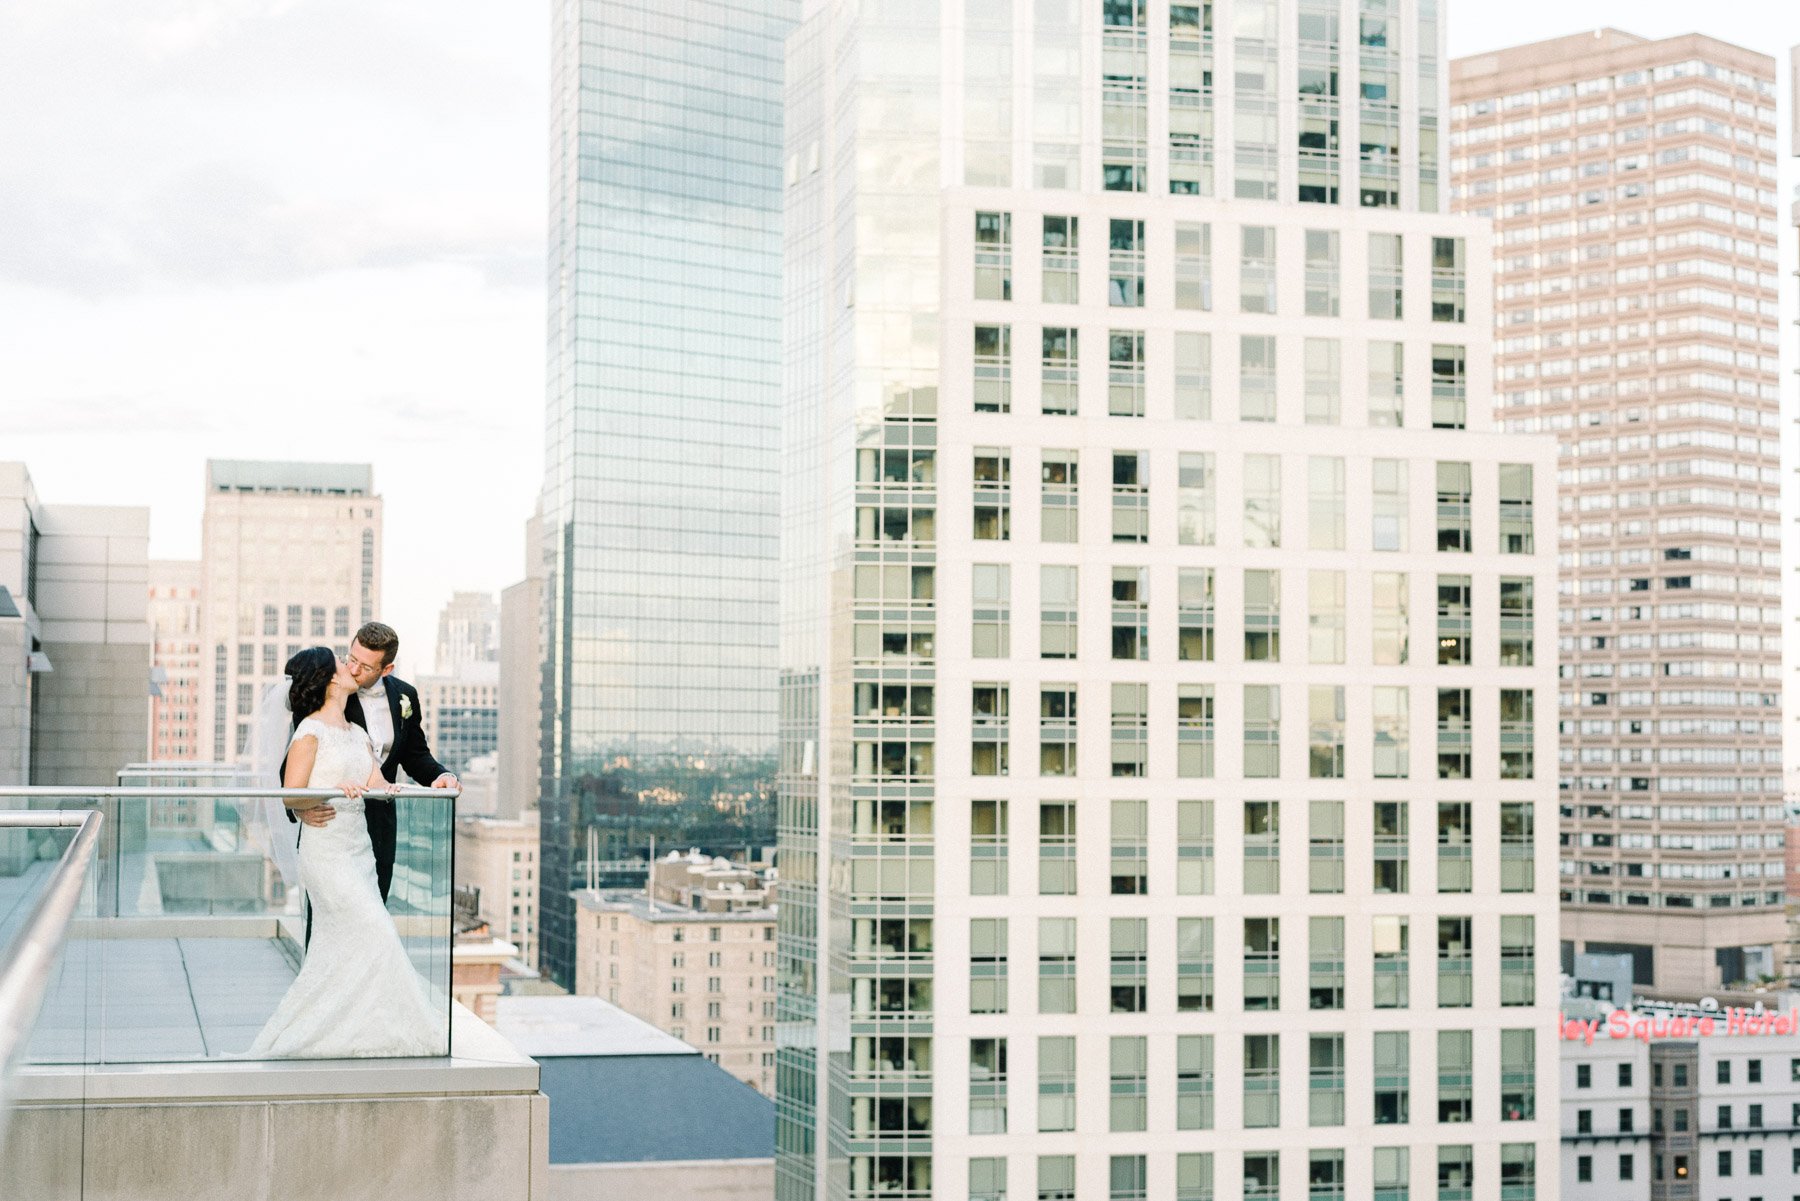 Rooftop wedding photos at Mandarin Oriental in Boston